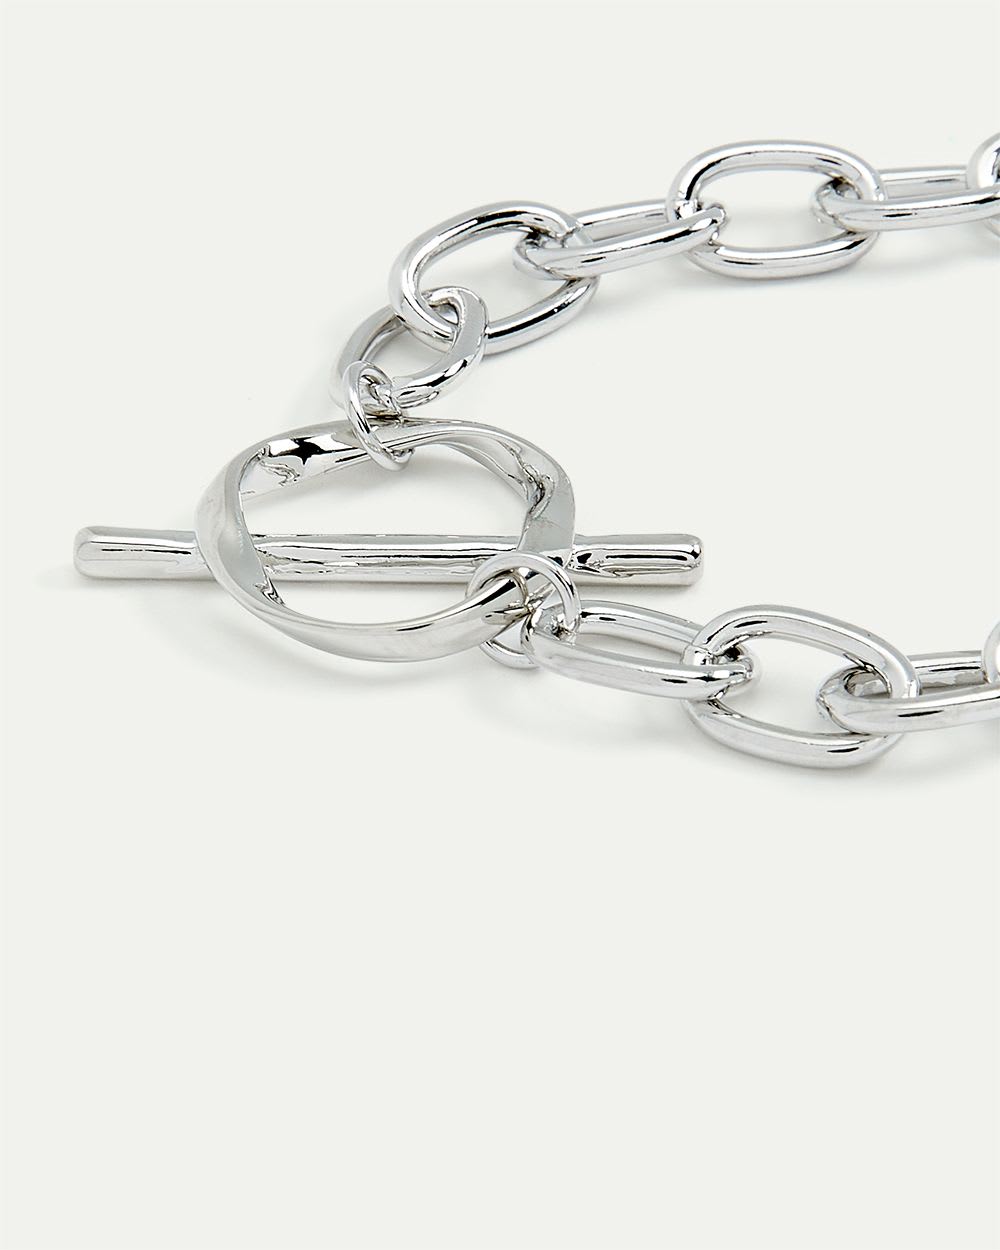 Large Link Bracelet with Toggle